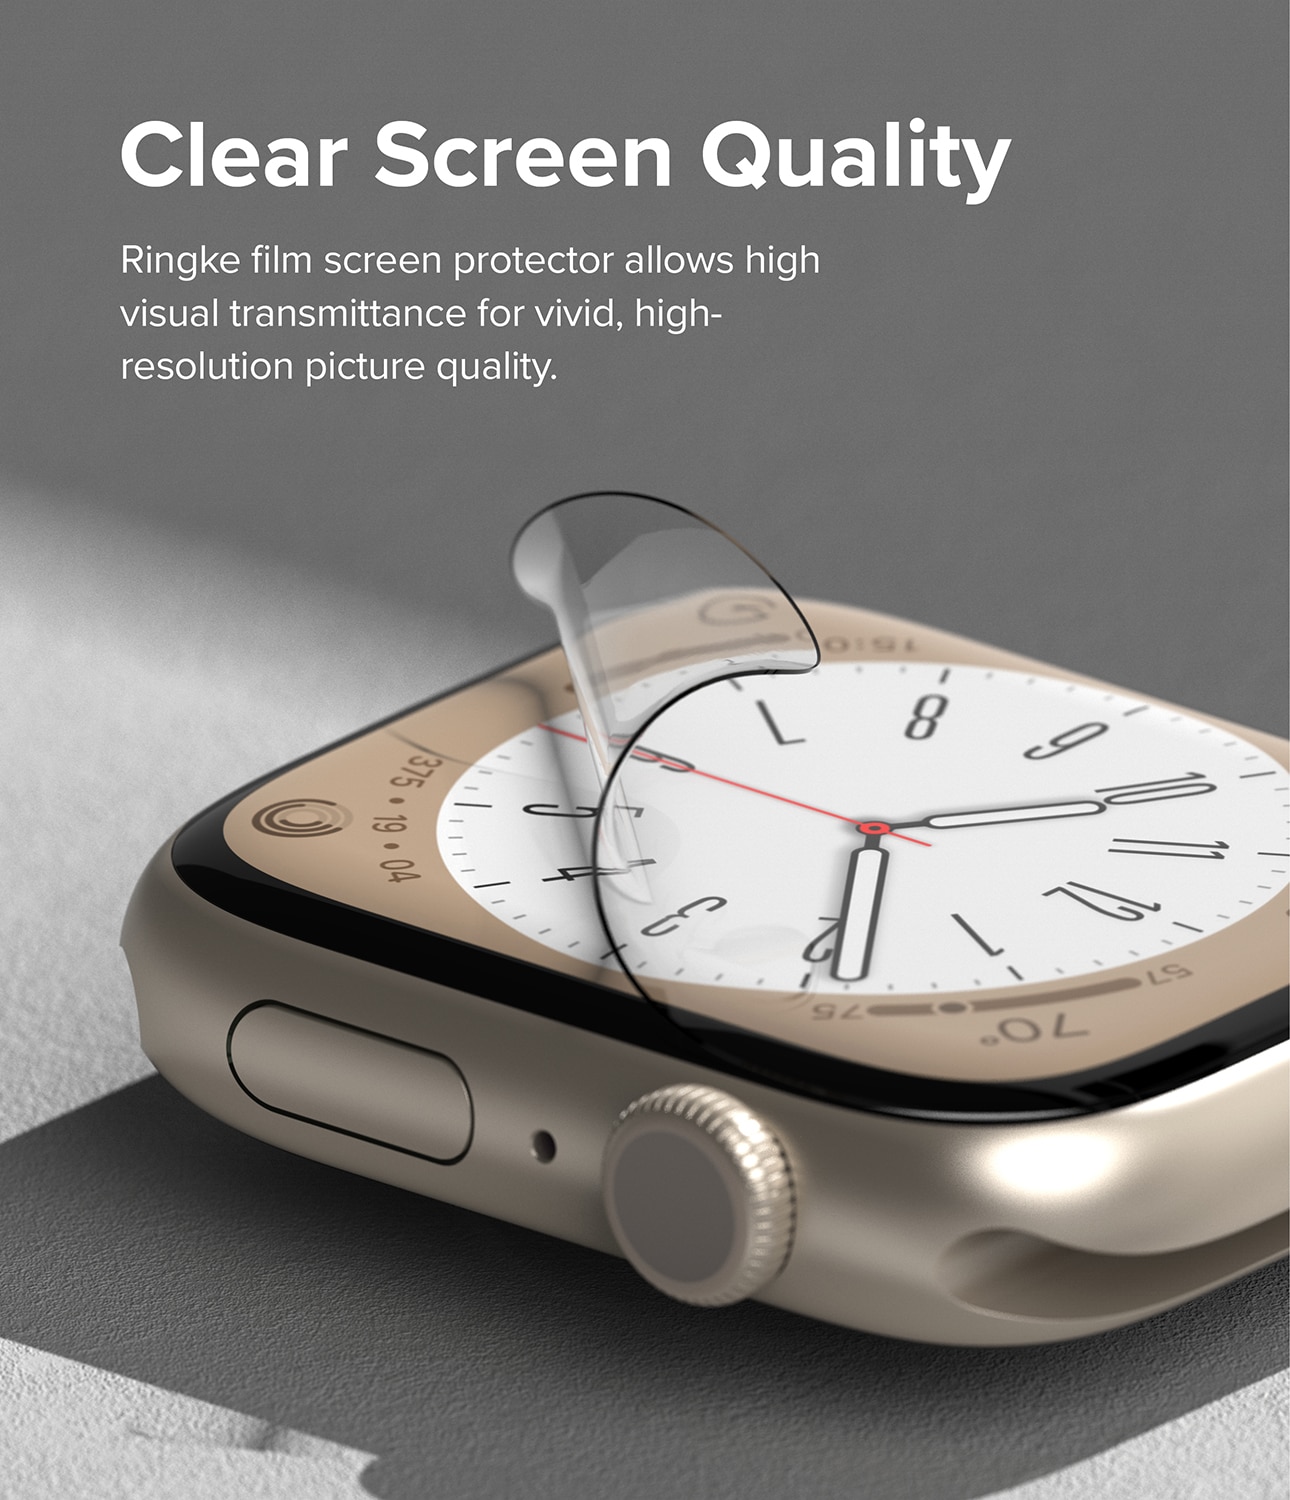 Dual Easy Screen Protector (3-pack) Apple Watch 41mm Series 9